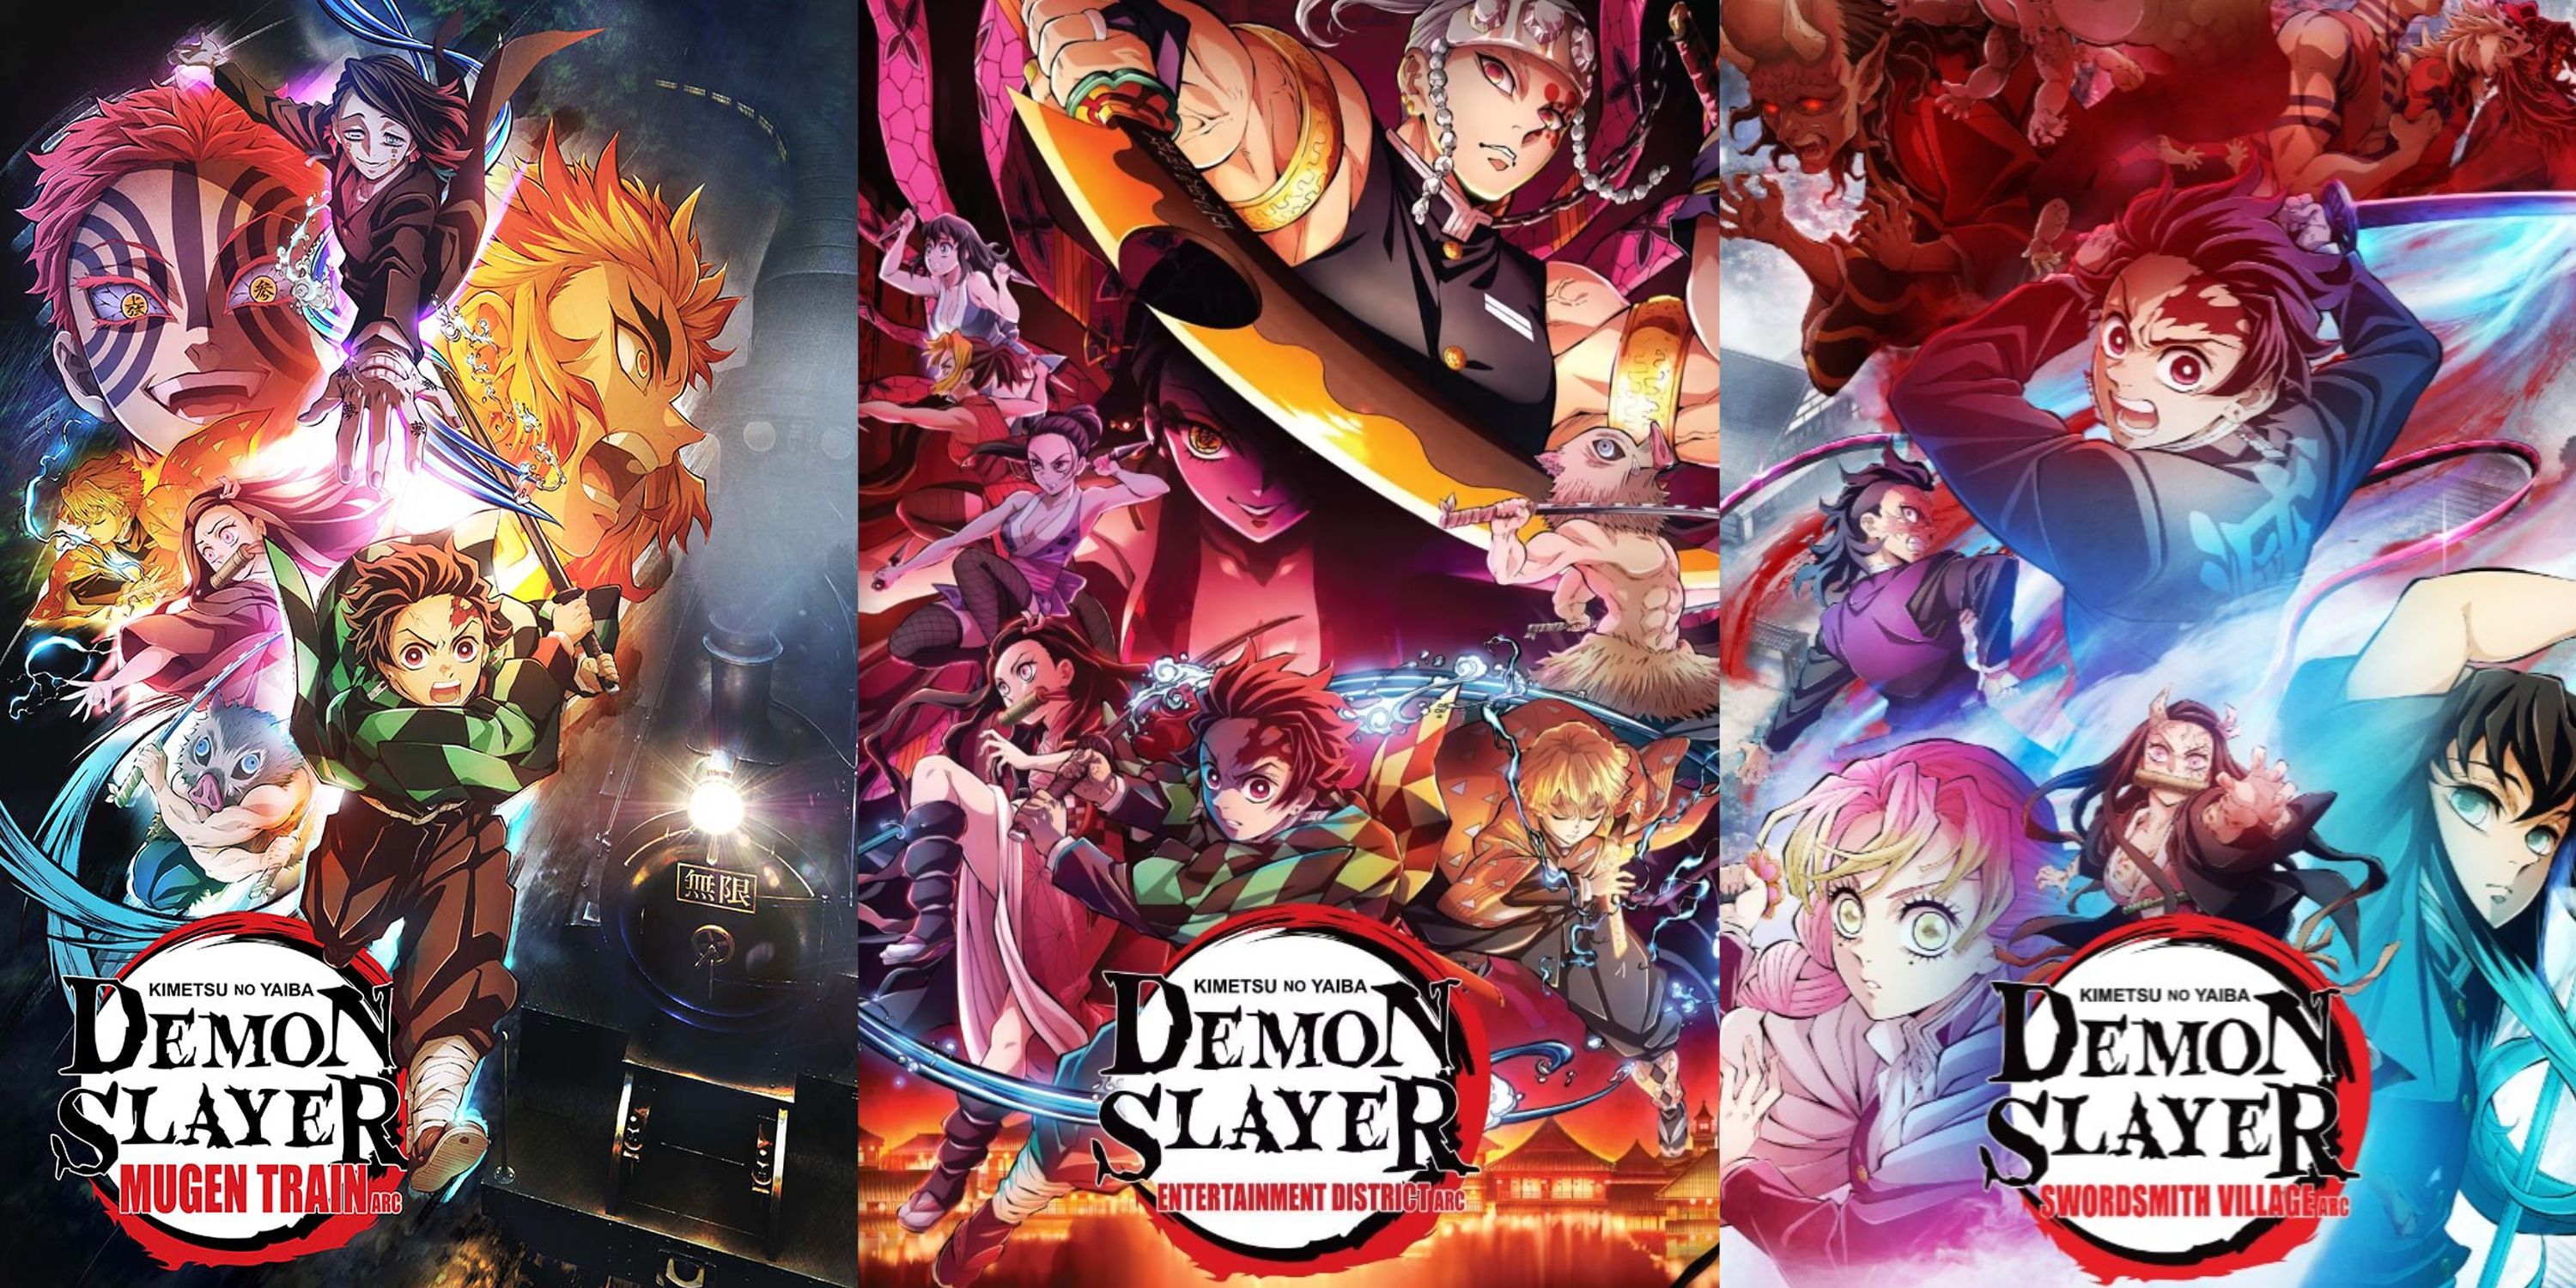 Demon Slayer season 2 seems like it has the same content of Mugen